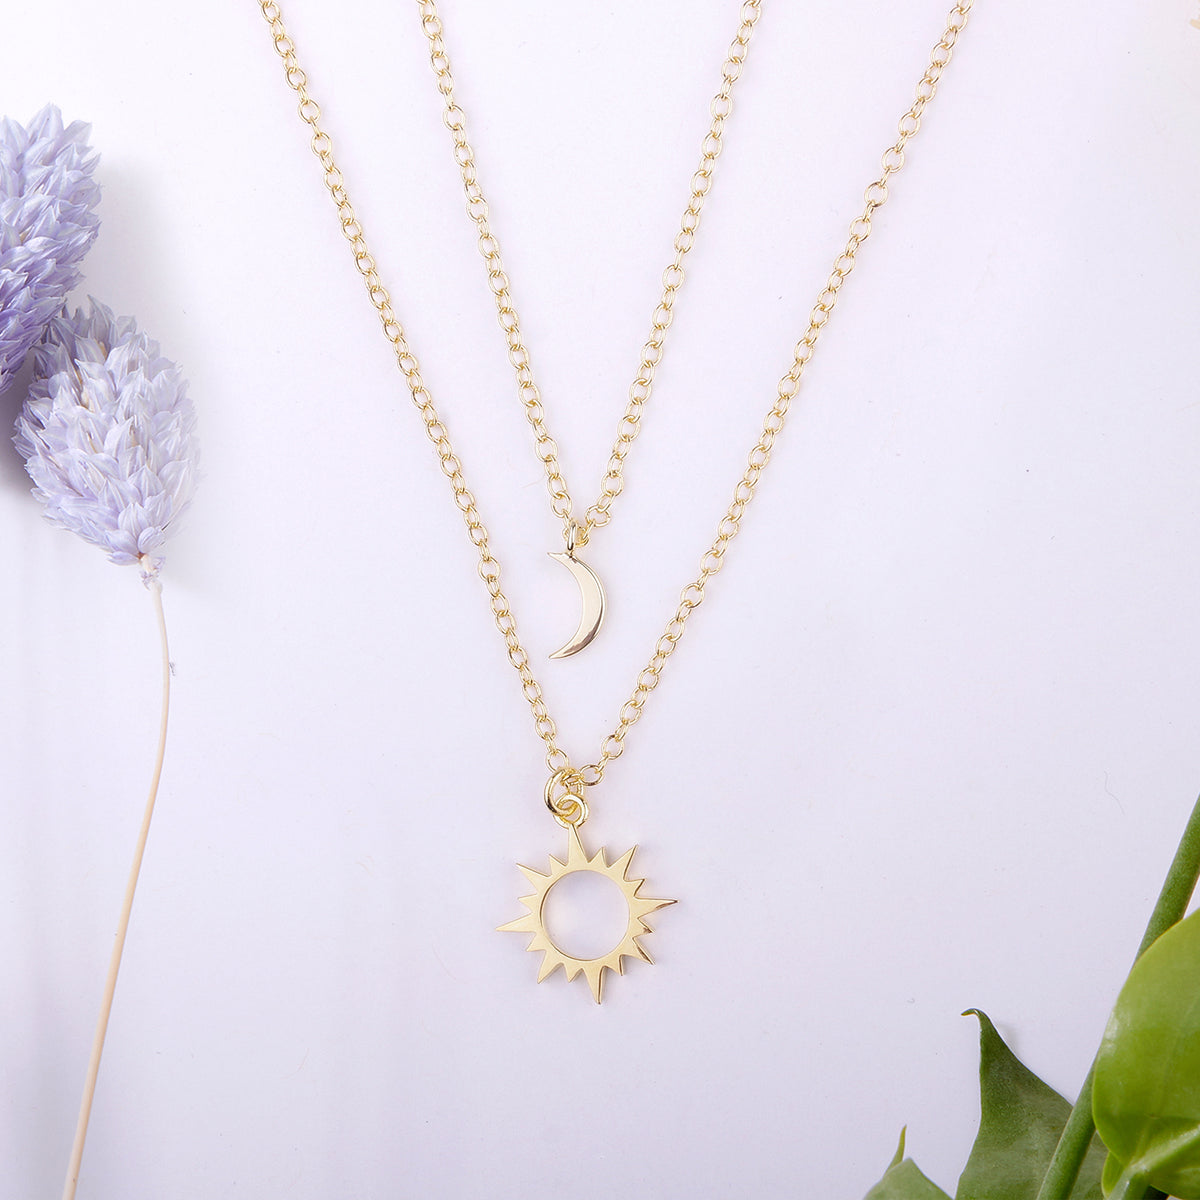 Bruja Sun and Moon Pendants Necklace Set